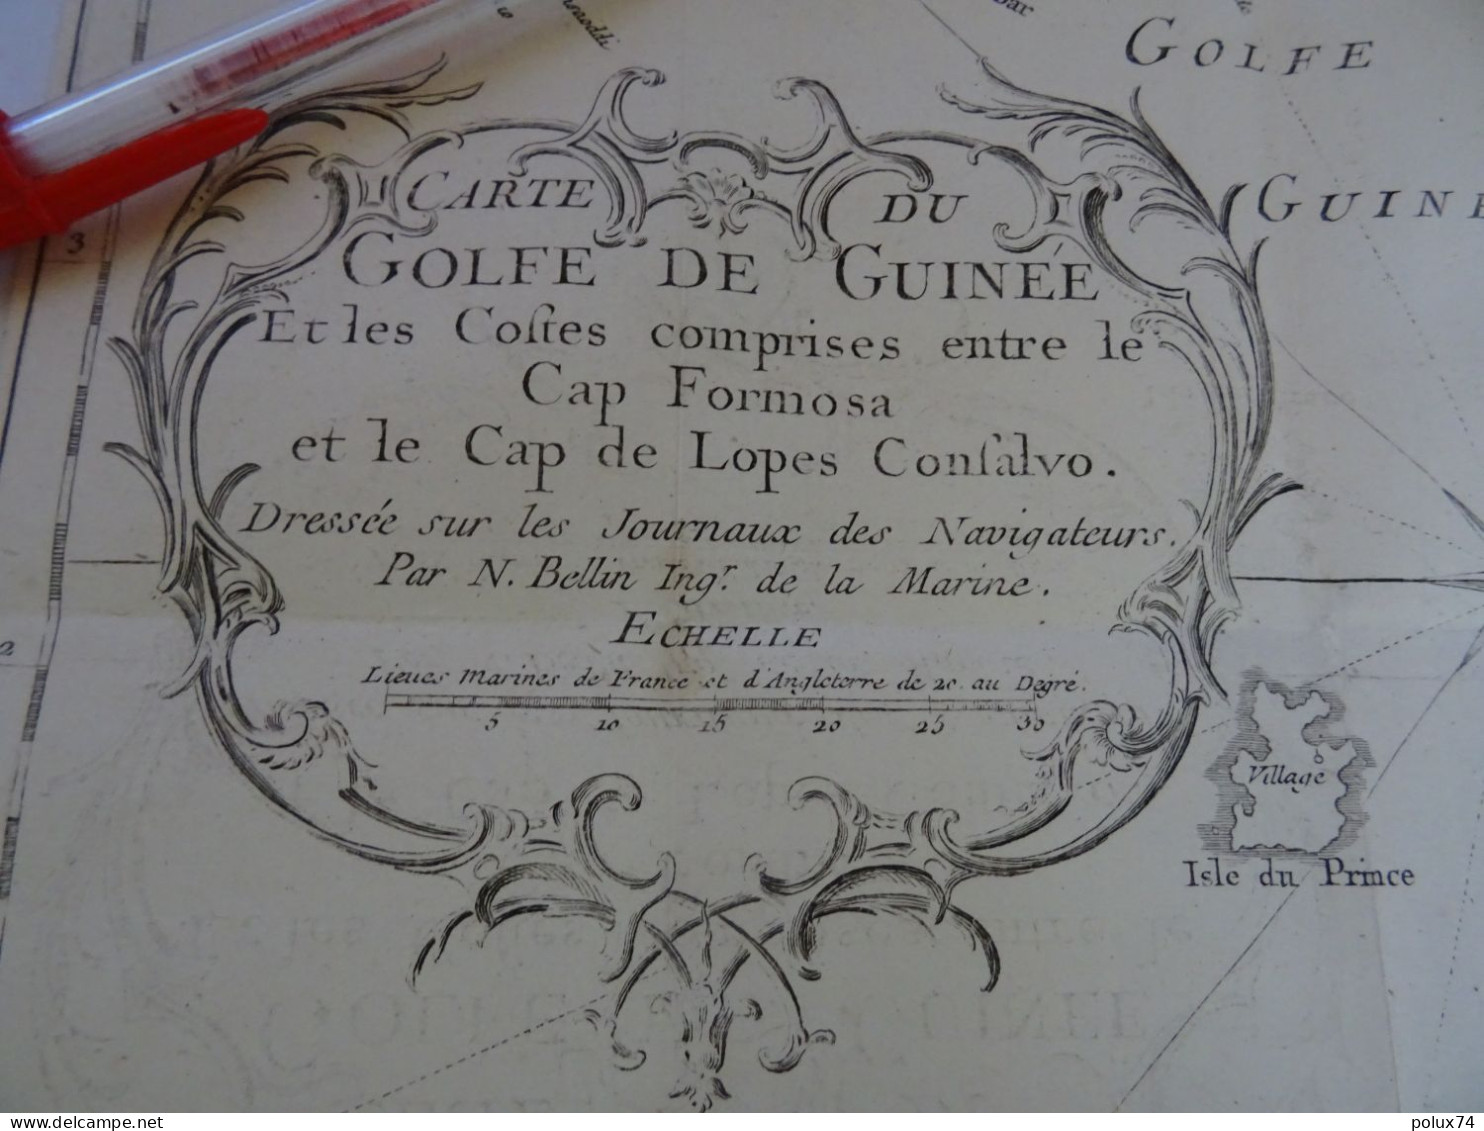 CARTE GOLFE DE GUINEE Ancienne ! - Nautical Charts